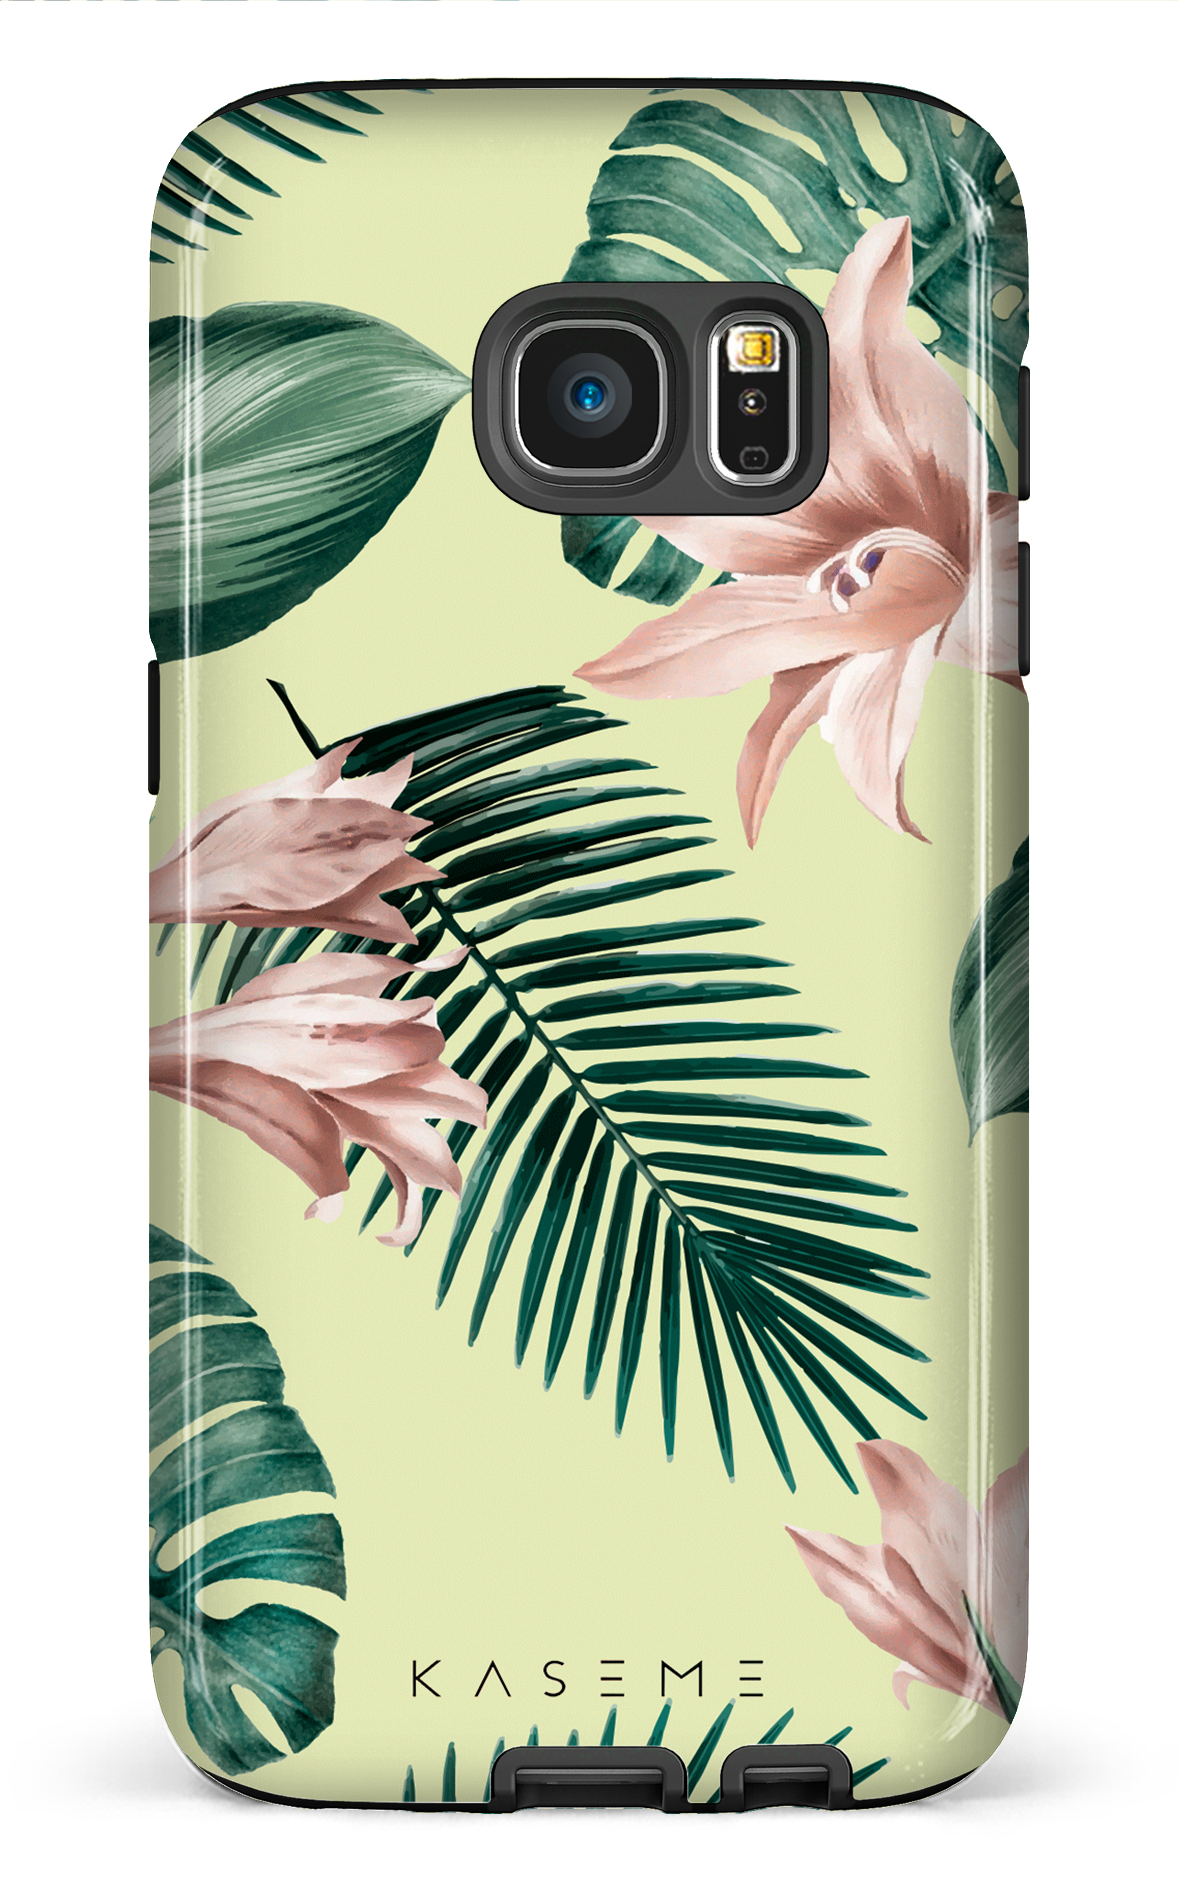 Maui - Galaxy S7